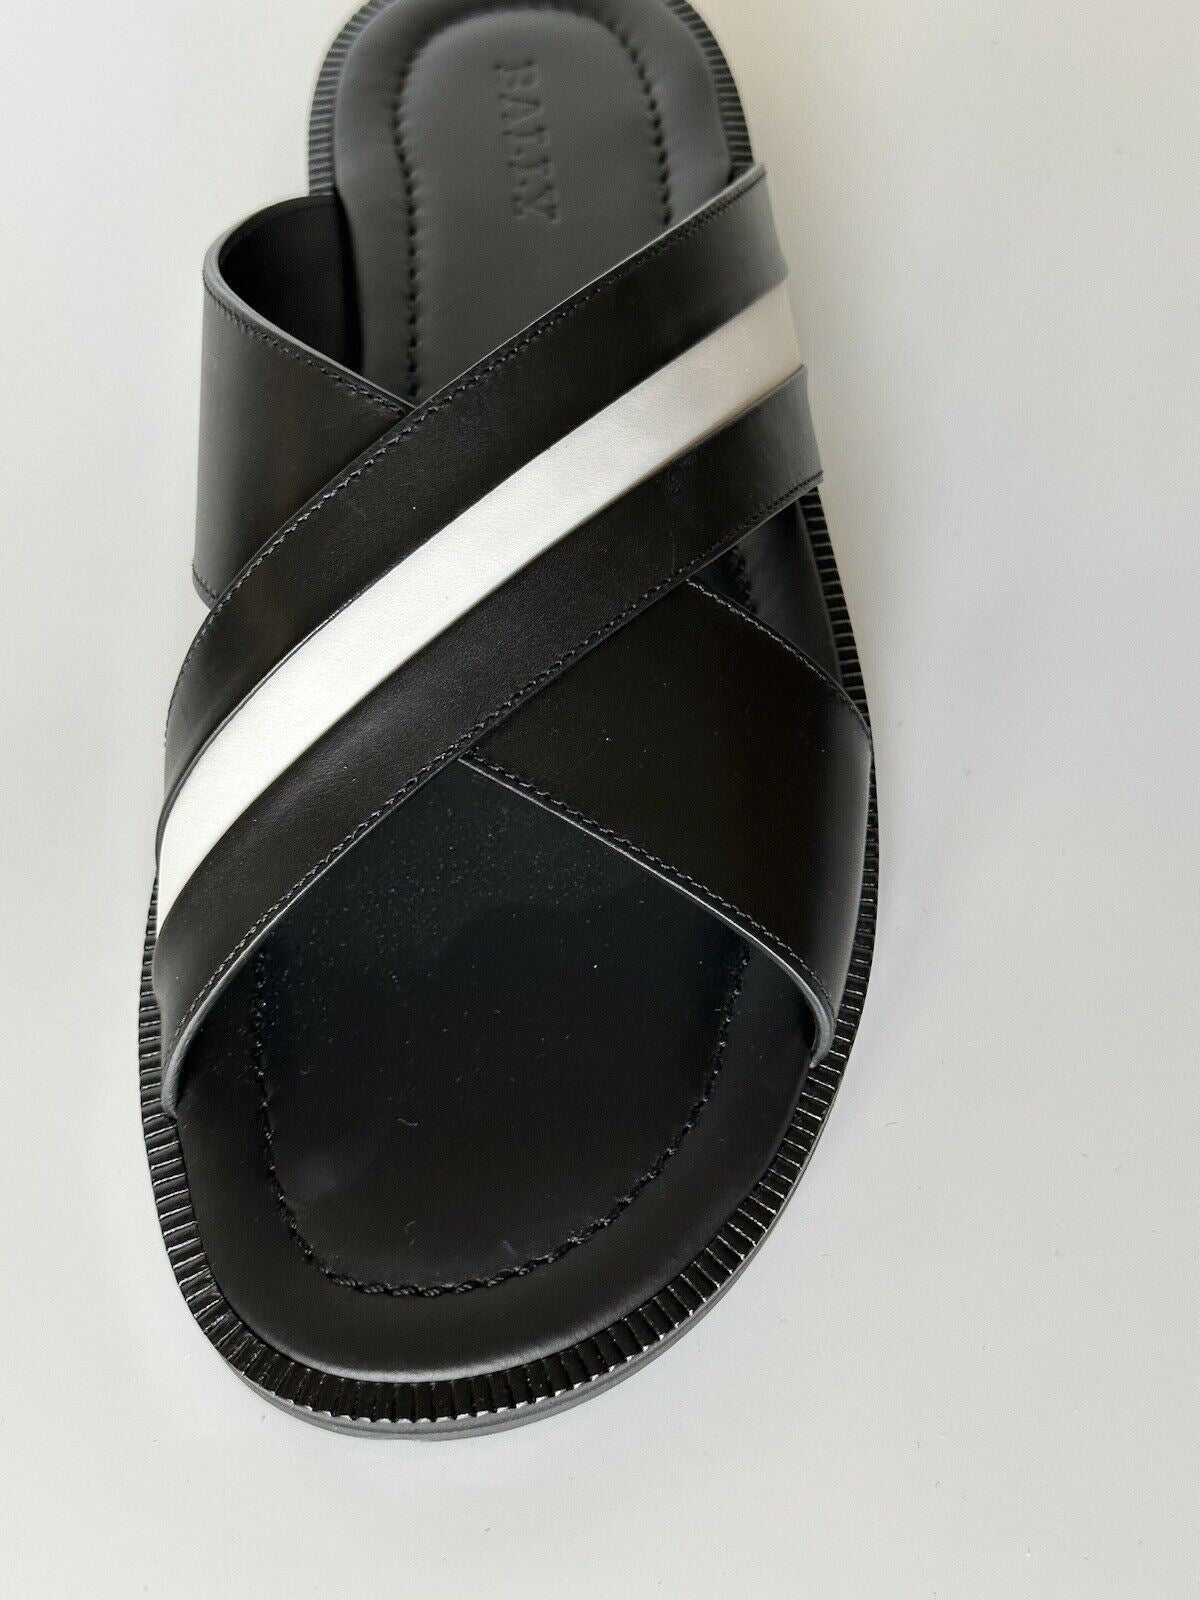 NIB $560 Bally Men's Jaabir Leather Black Slides Sandals 11.5 US (44.5) 6231507